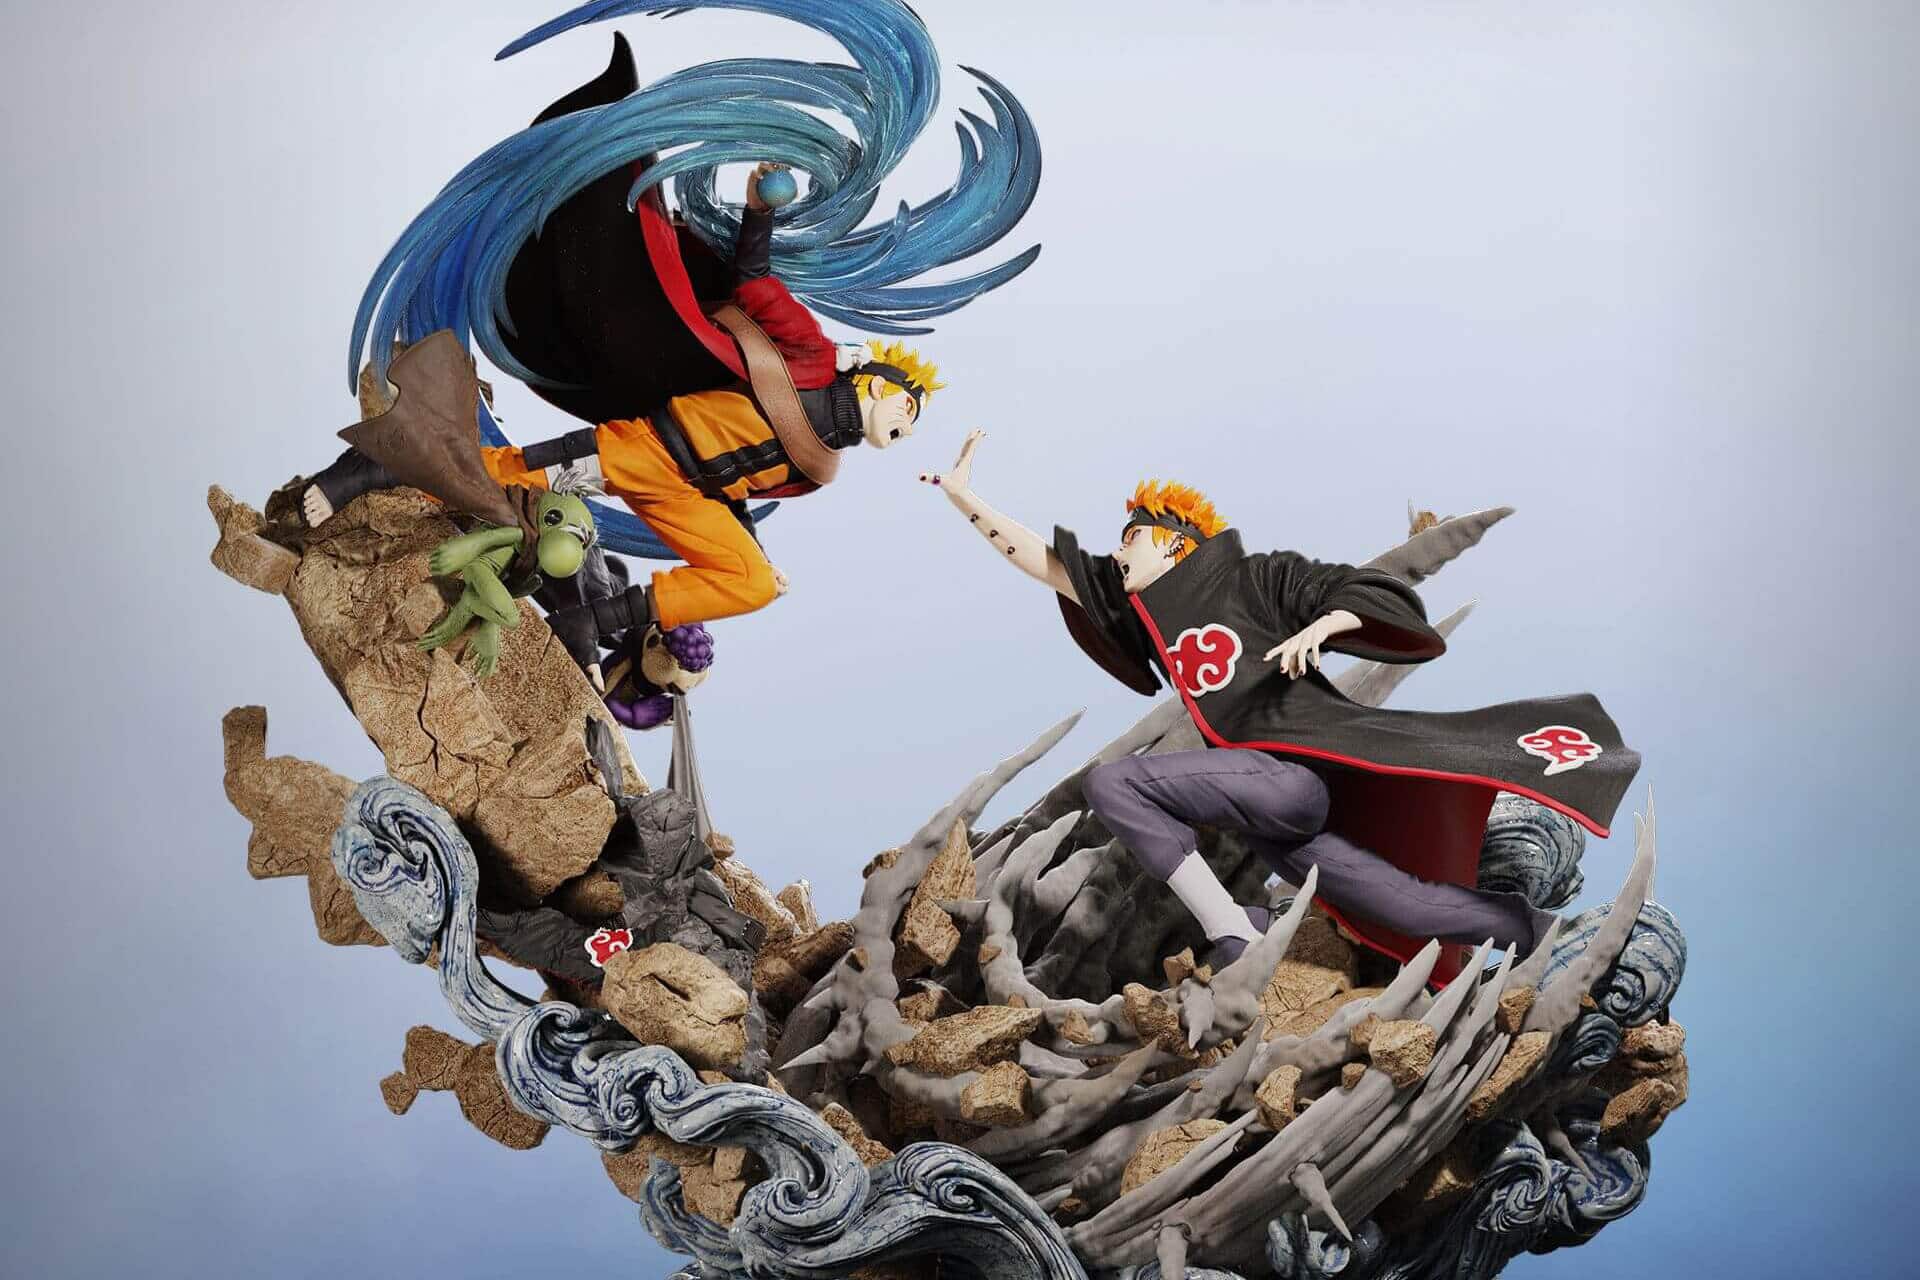 Figurama Reveal 1st Naruto Shippuden Statue of Naruto vs Pain